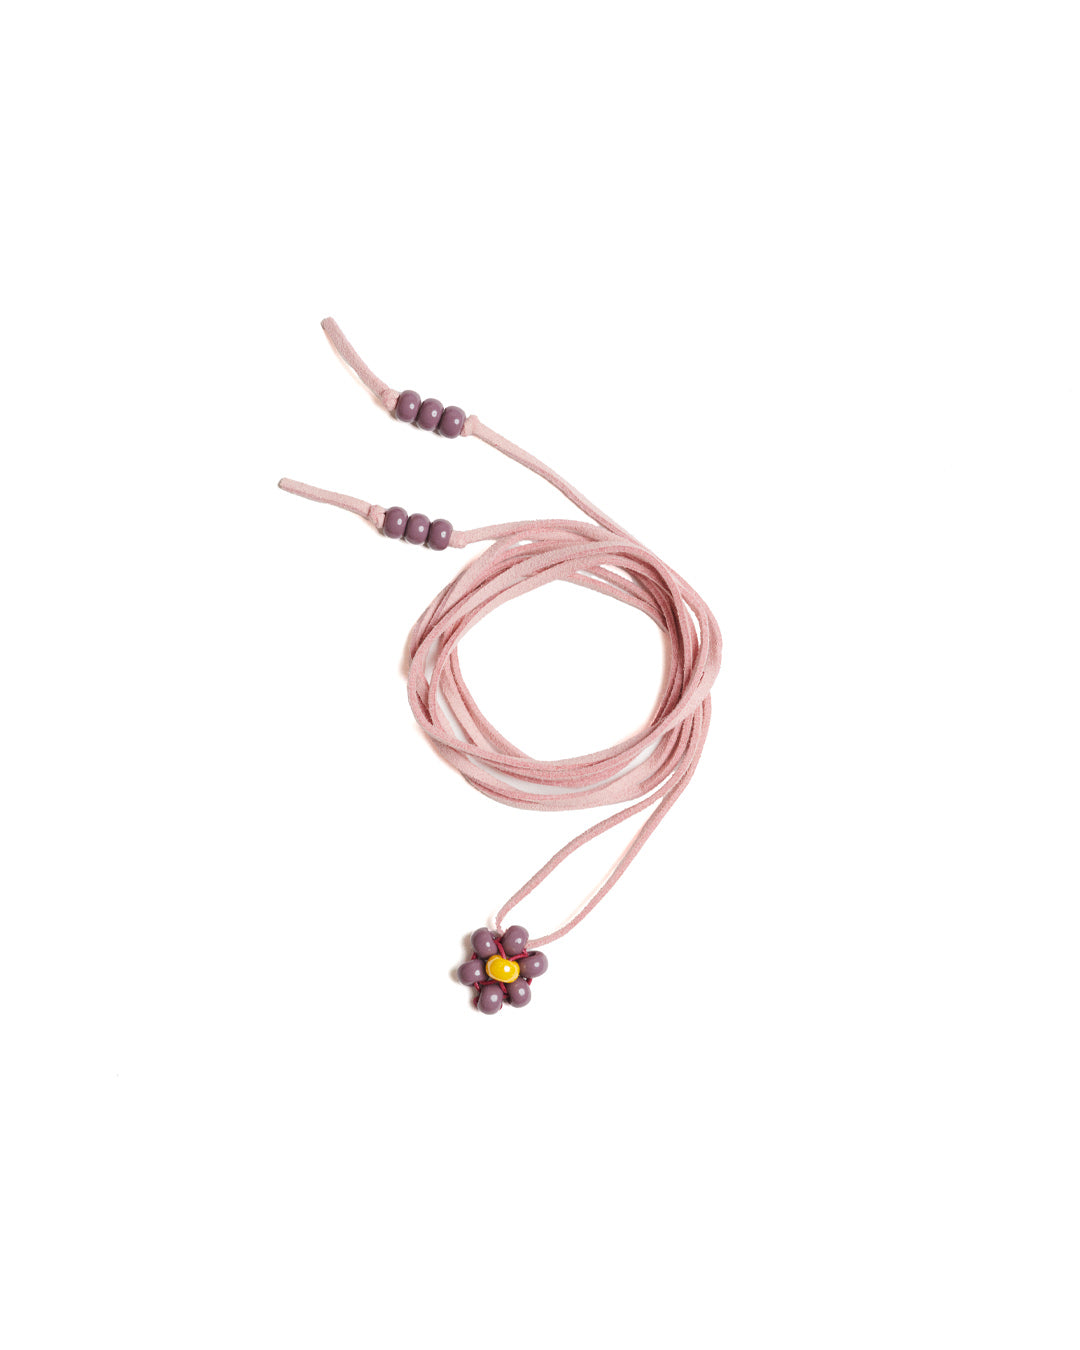 Fleur Simple - handmade beads necklace - Fleur de Peau